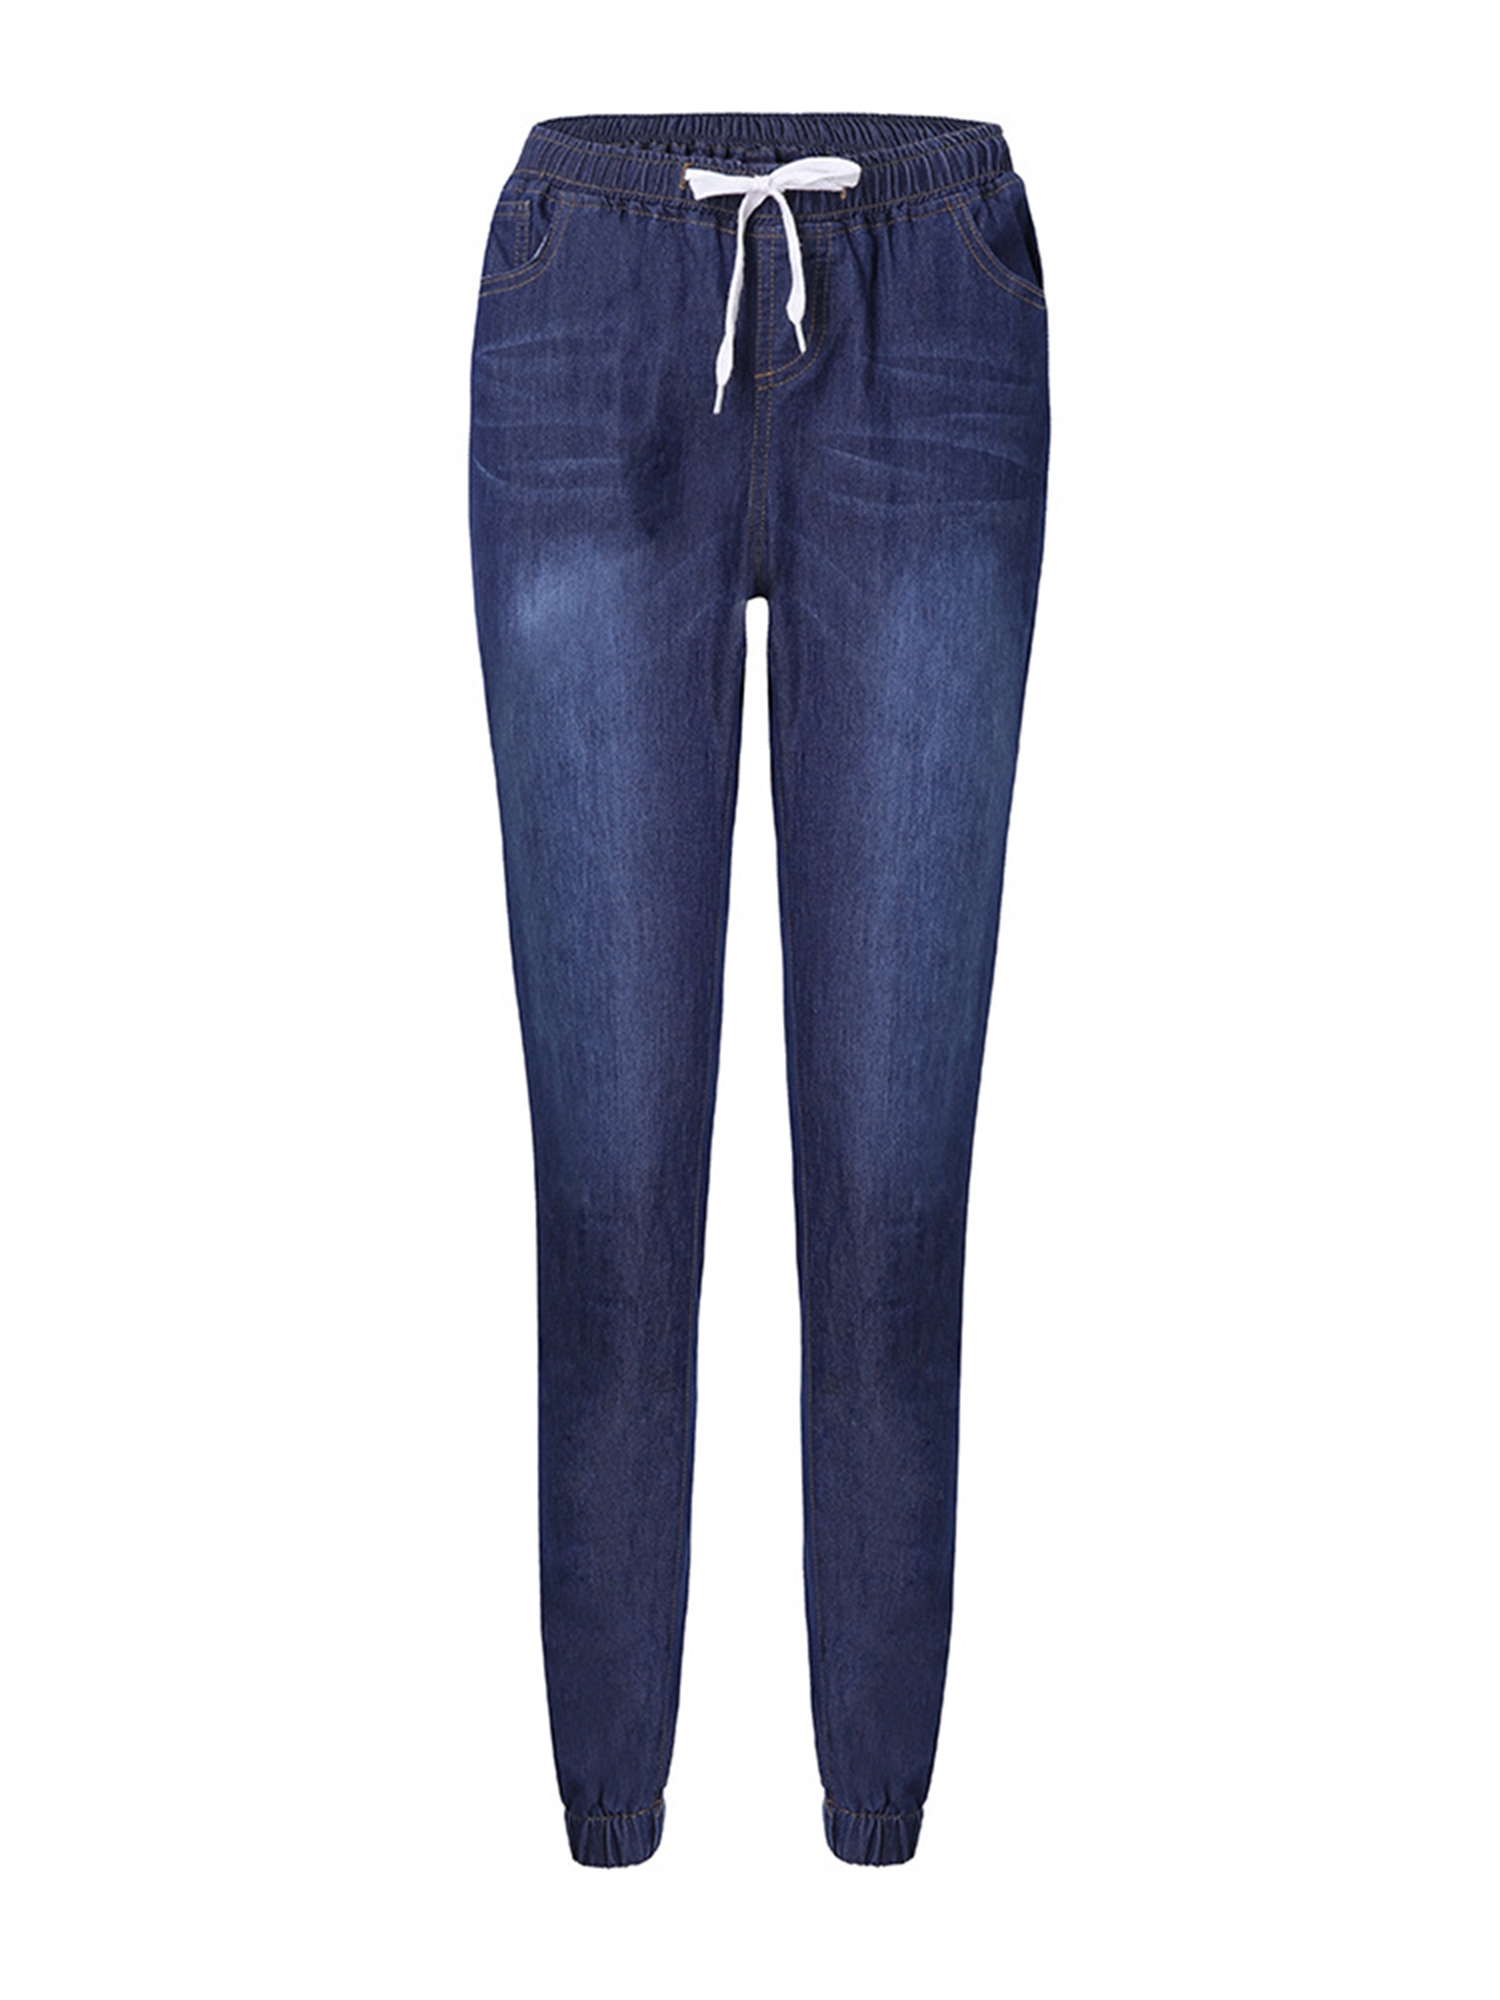 GuliriFei Women's Mid Rise Skinny Jeans Drawstring Elatic Waist Denim Pants - image 2 of 6